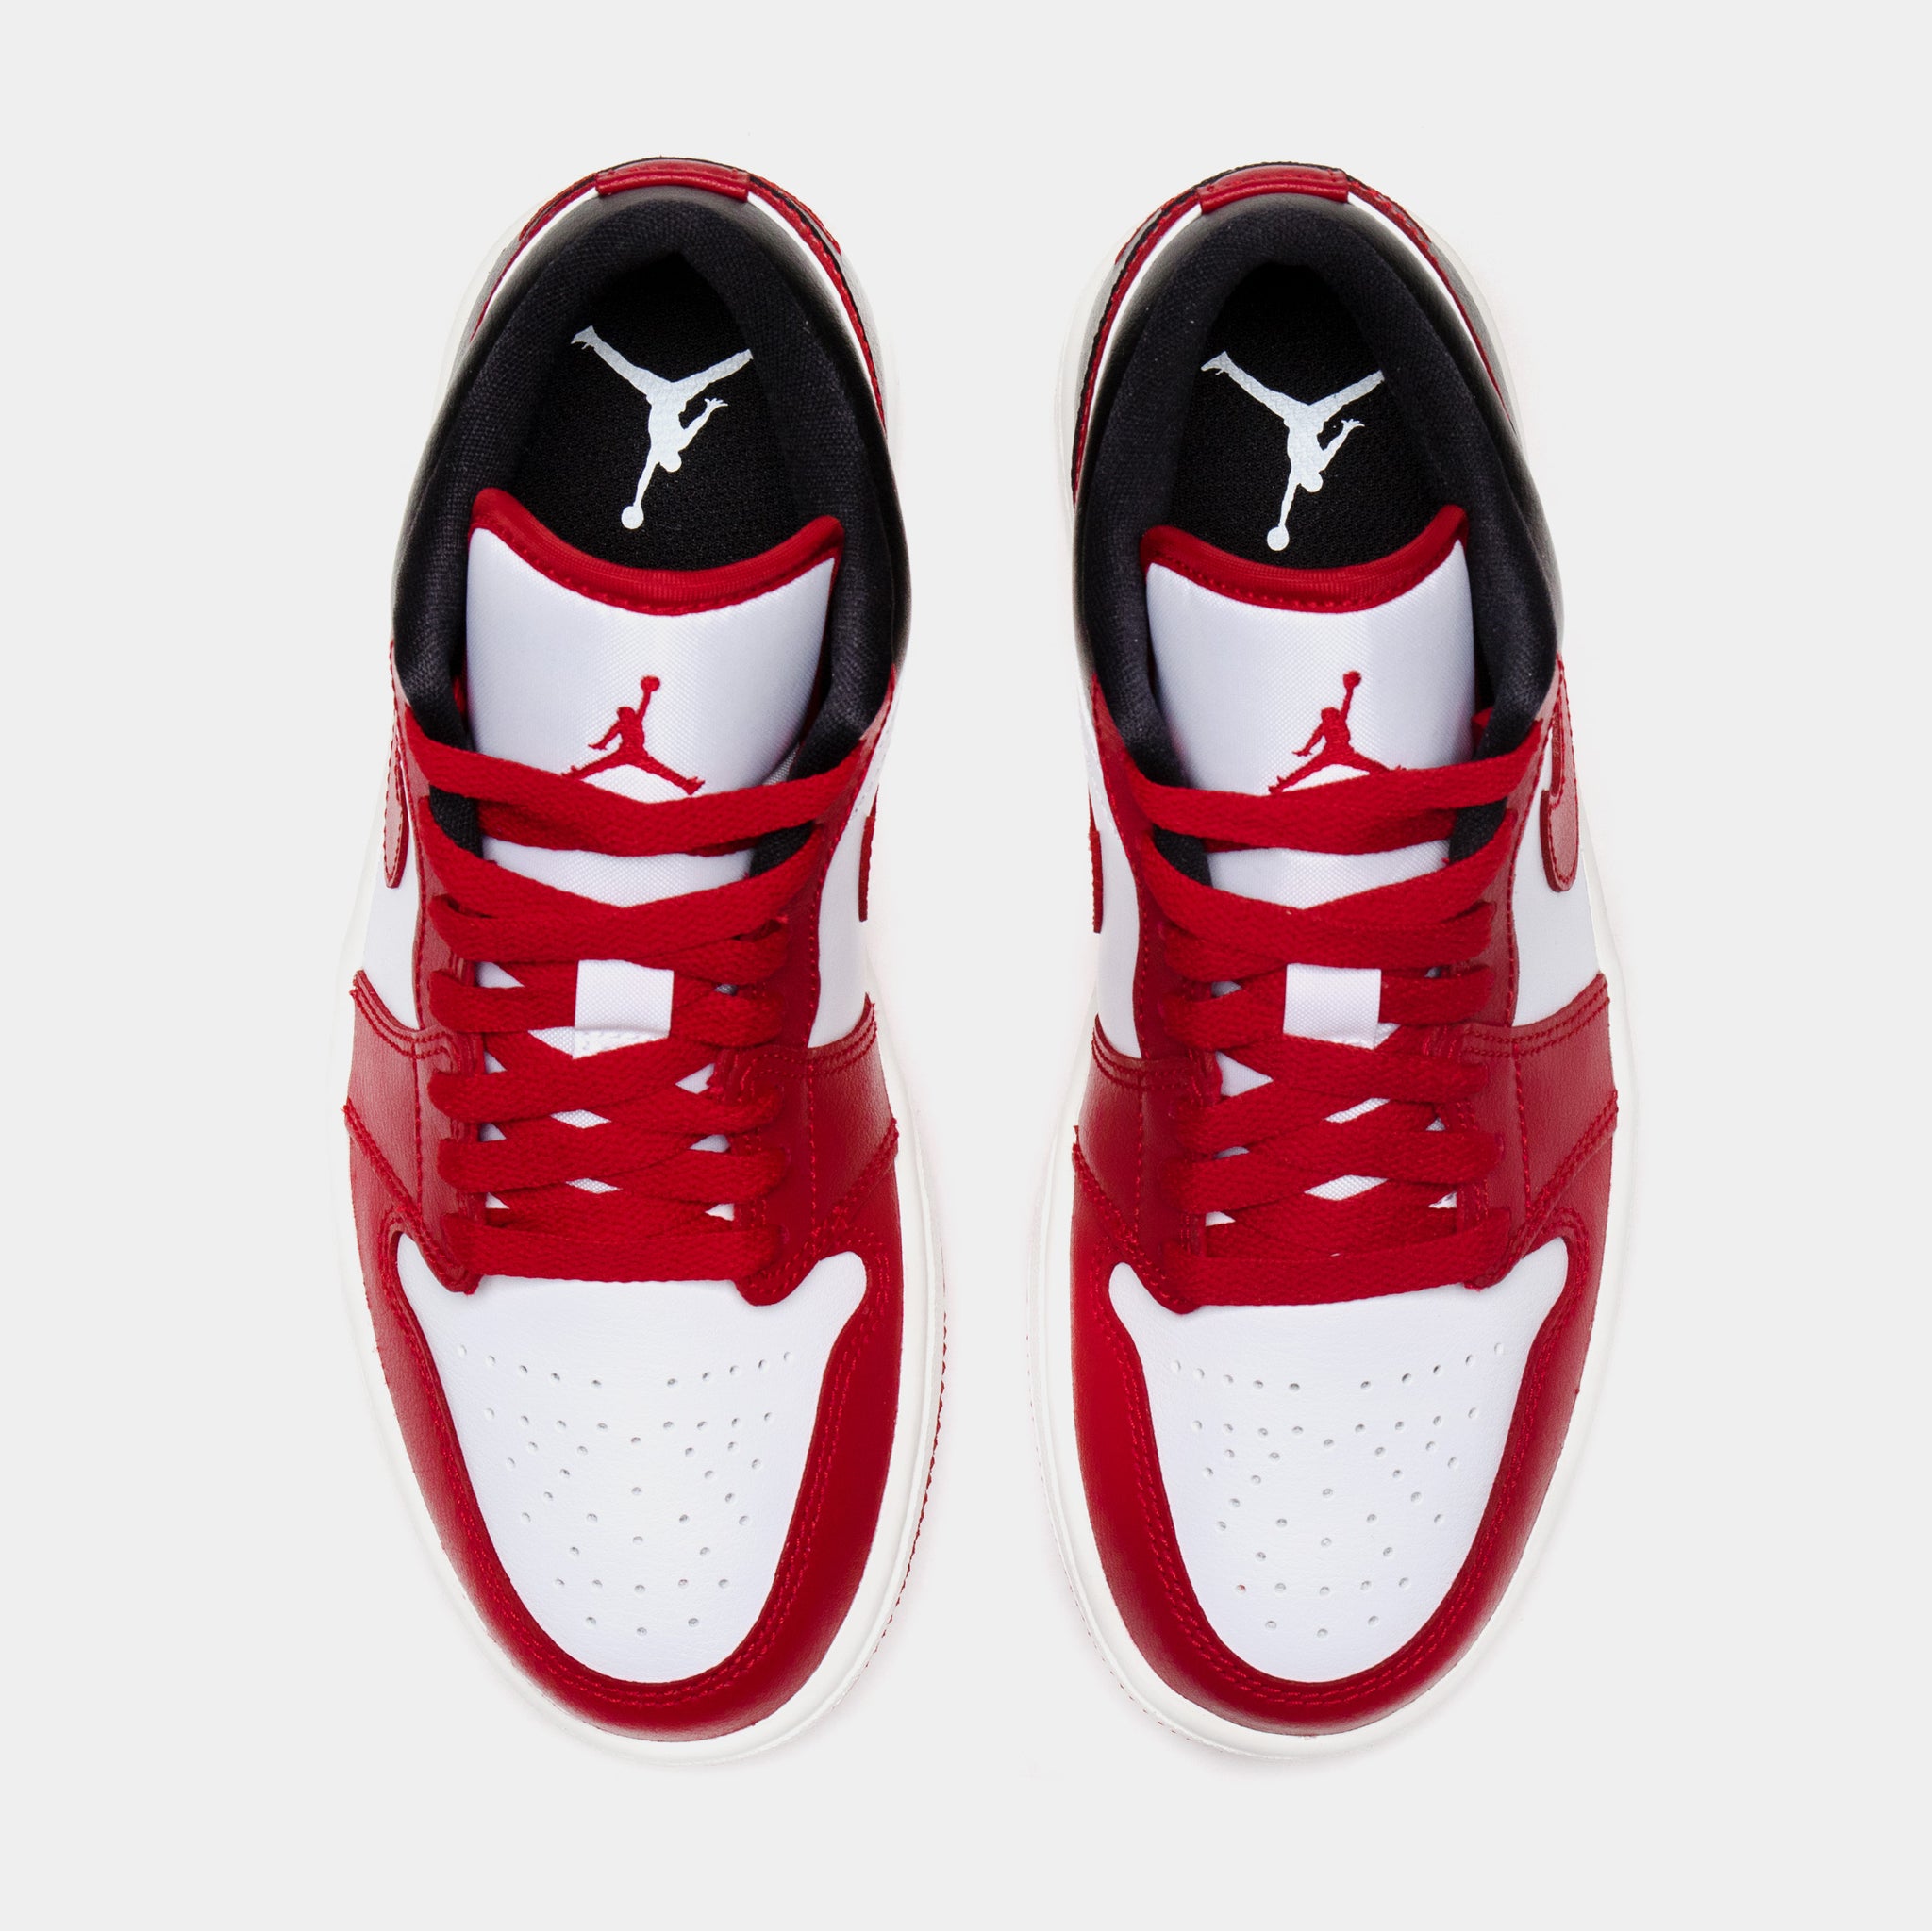 Jordan Air Jordan 1 Retro Low Gym Red Womens Lifestyle Shoes Black Red ...